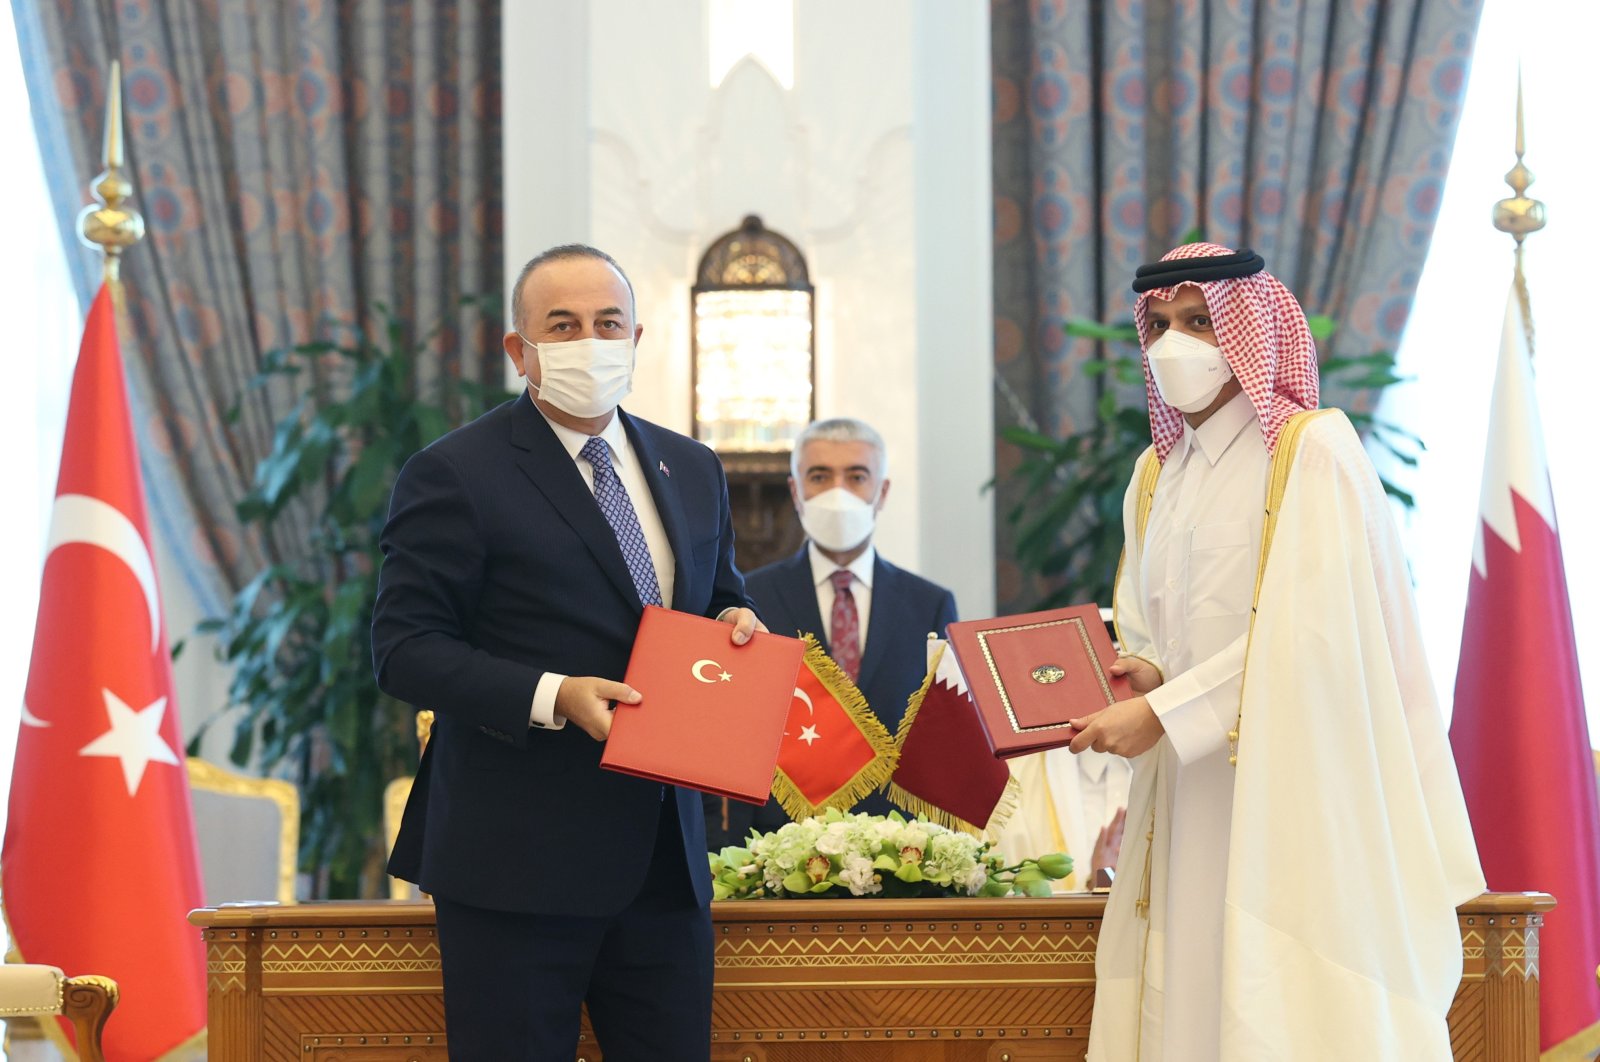 Foreign Minister Mevlüt Çavuşoğlu and his Qatari counterpart Sheikh Mohammad bin Abdulrahman Al Thani sign agreements during a meeting in Doha, Qatar, Dec. 8, 2021. (IHA File Photo)